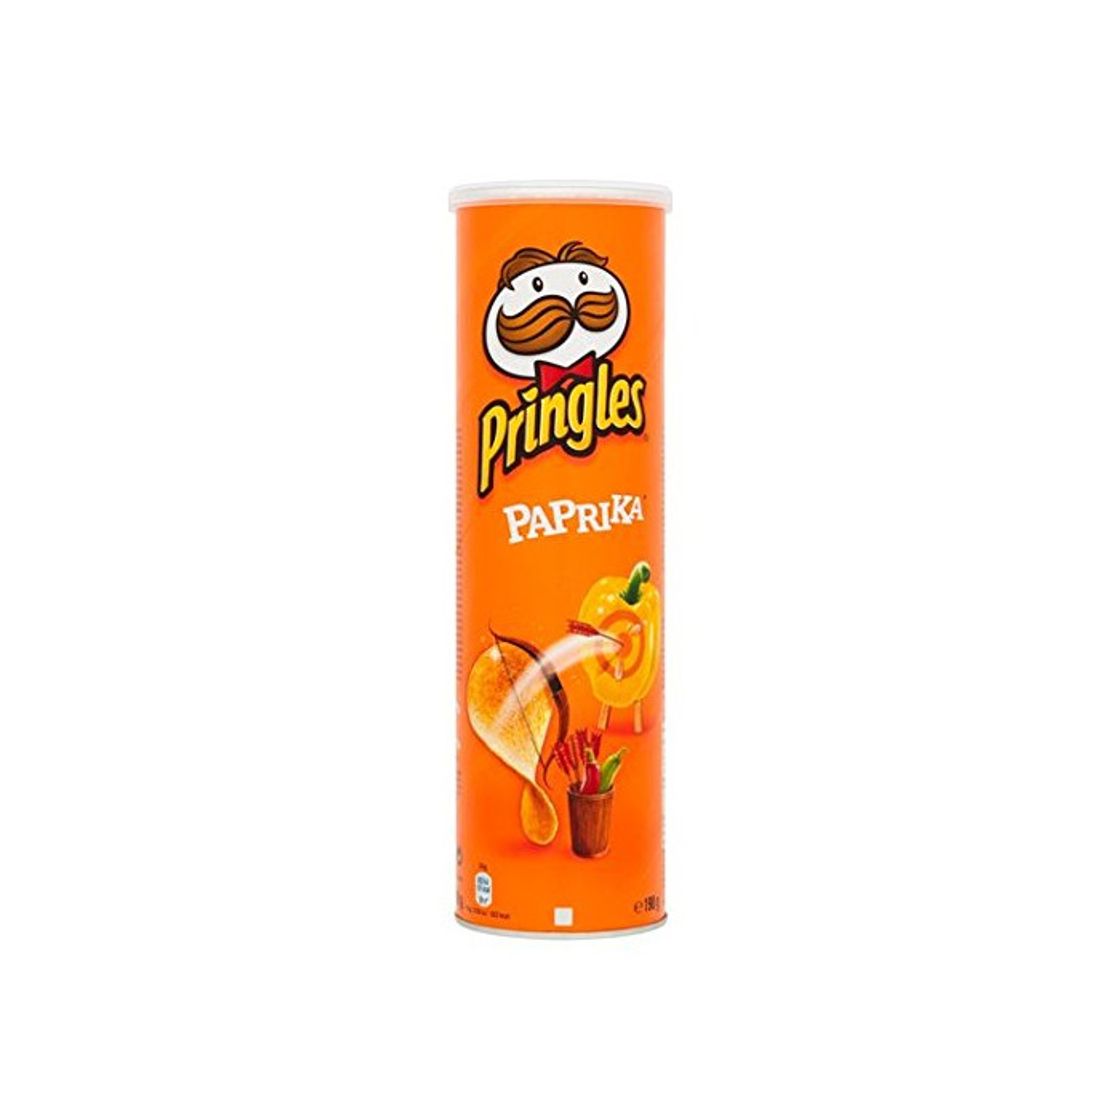 Pringles Paprika 190g